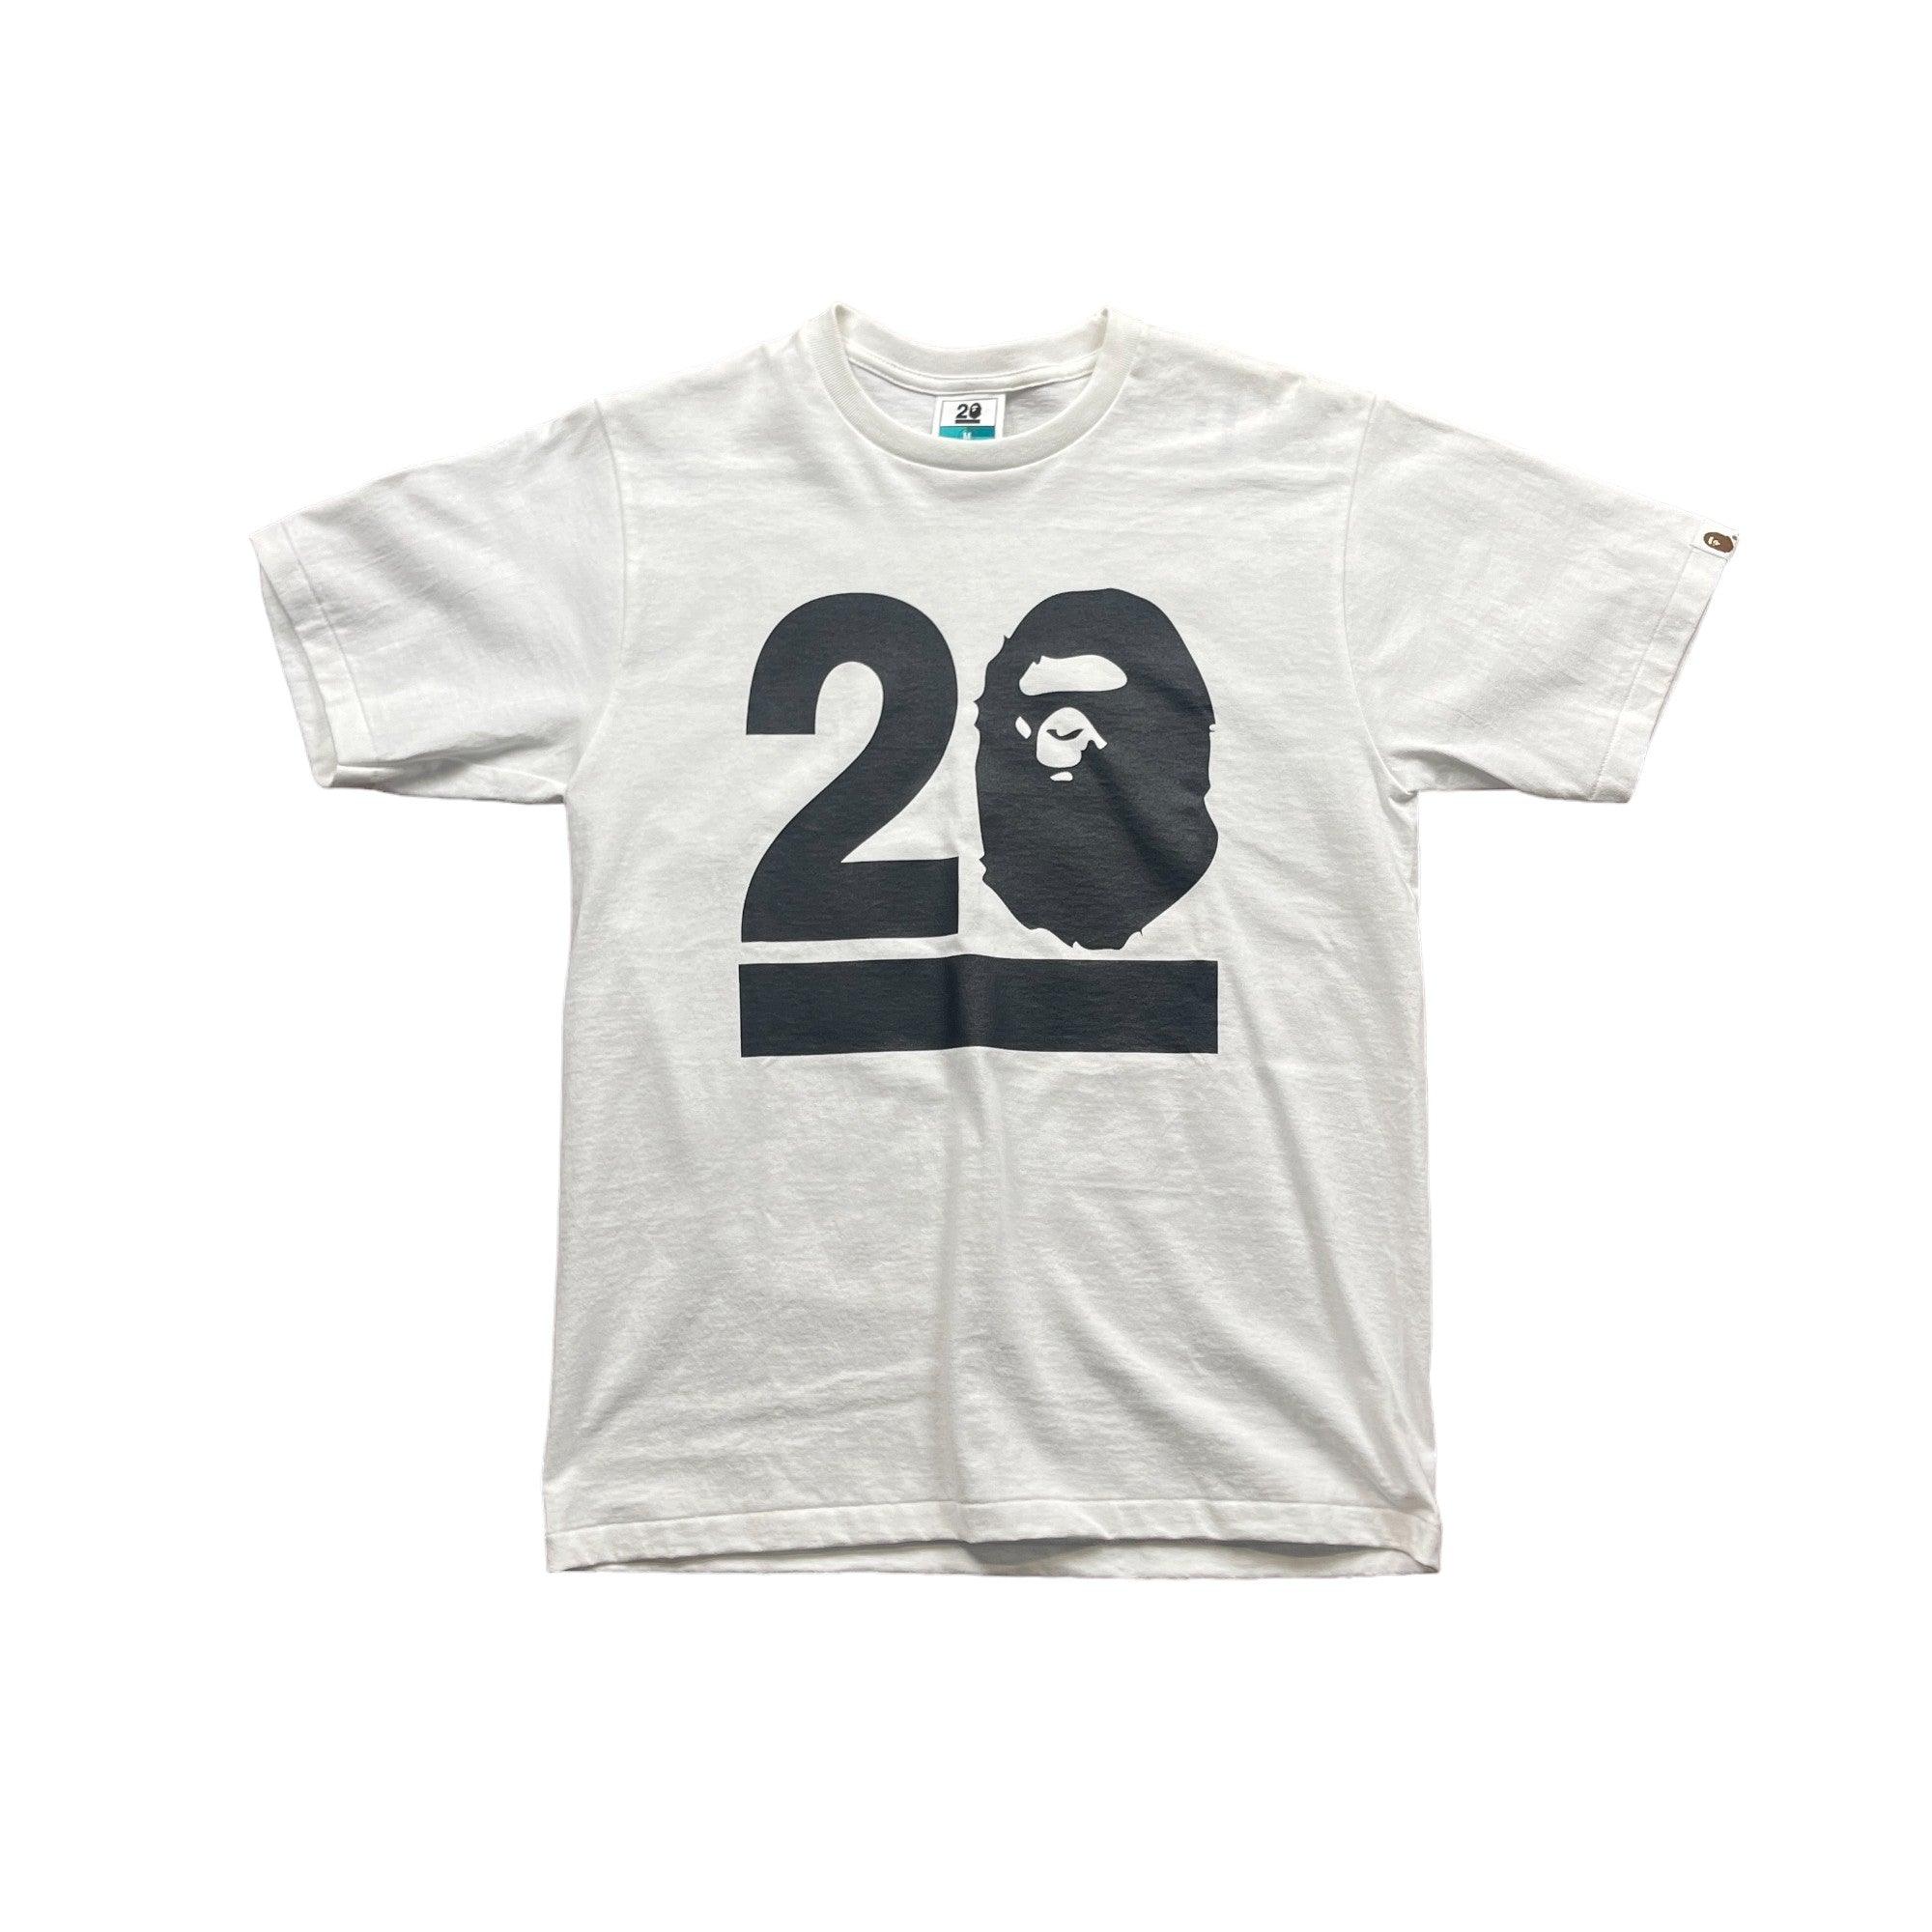 White A Bathing Ape (BAPE) 20th Anniversary Tee - Medium - The Streetwear Studio